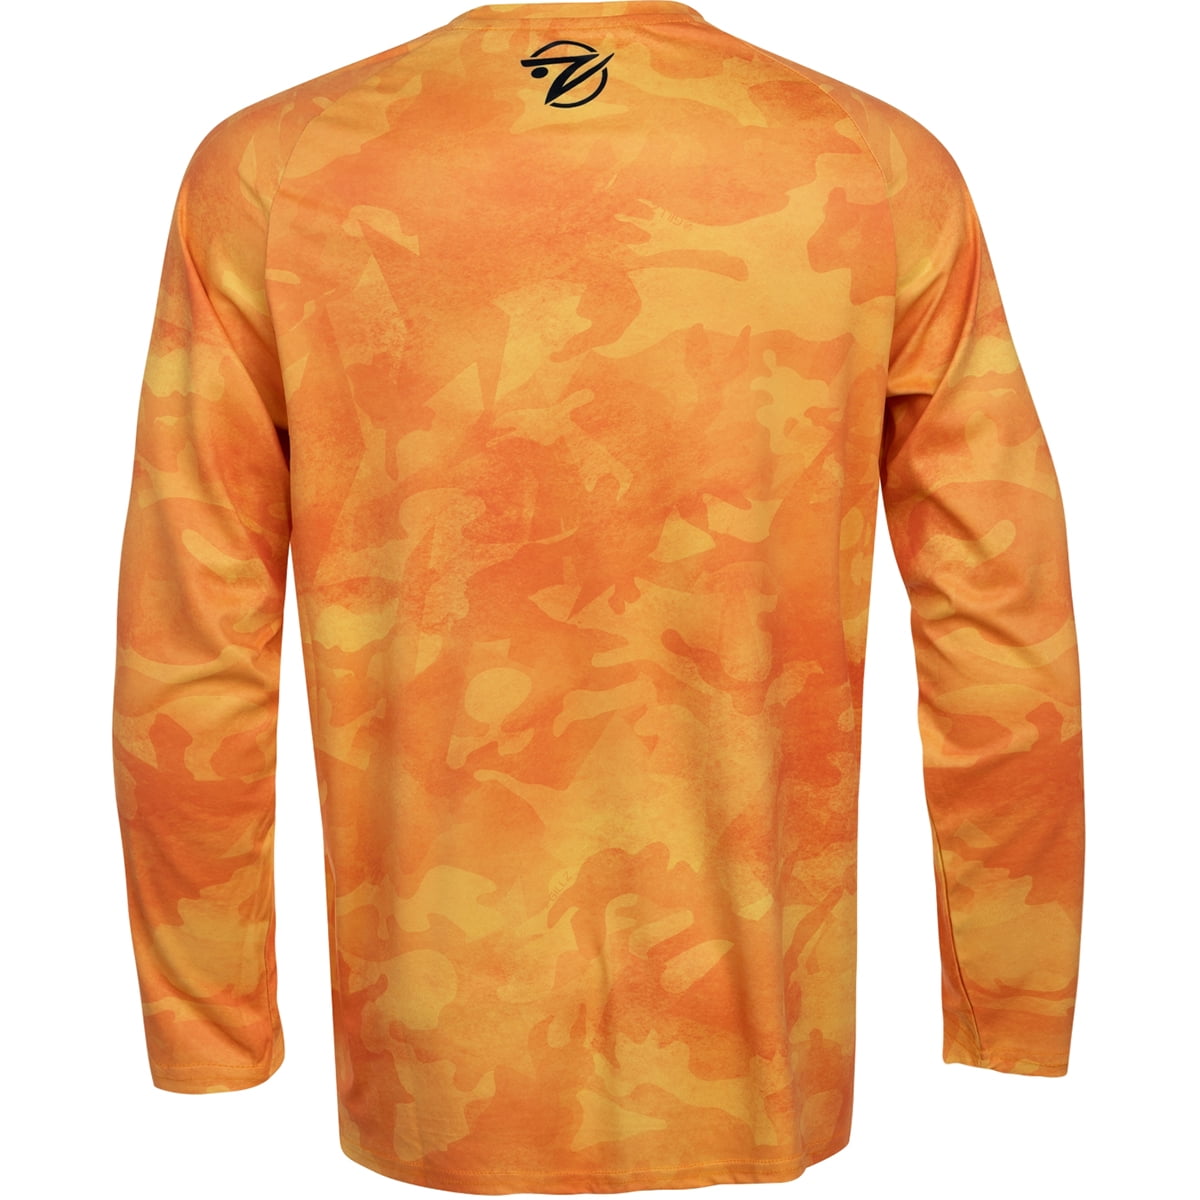 Gillz Contender Series Burnt UV Long Sleeve T-Shirt - Large - Sun Orange 